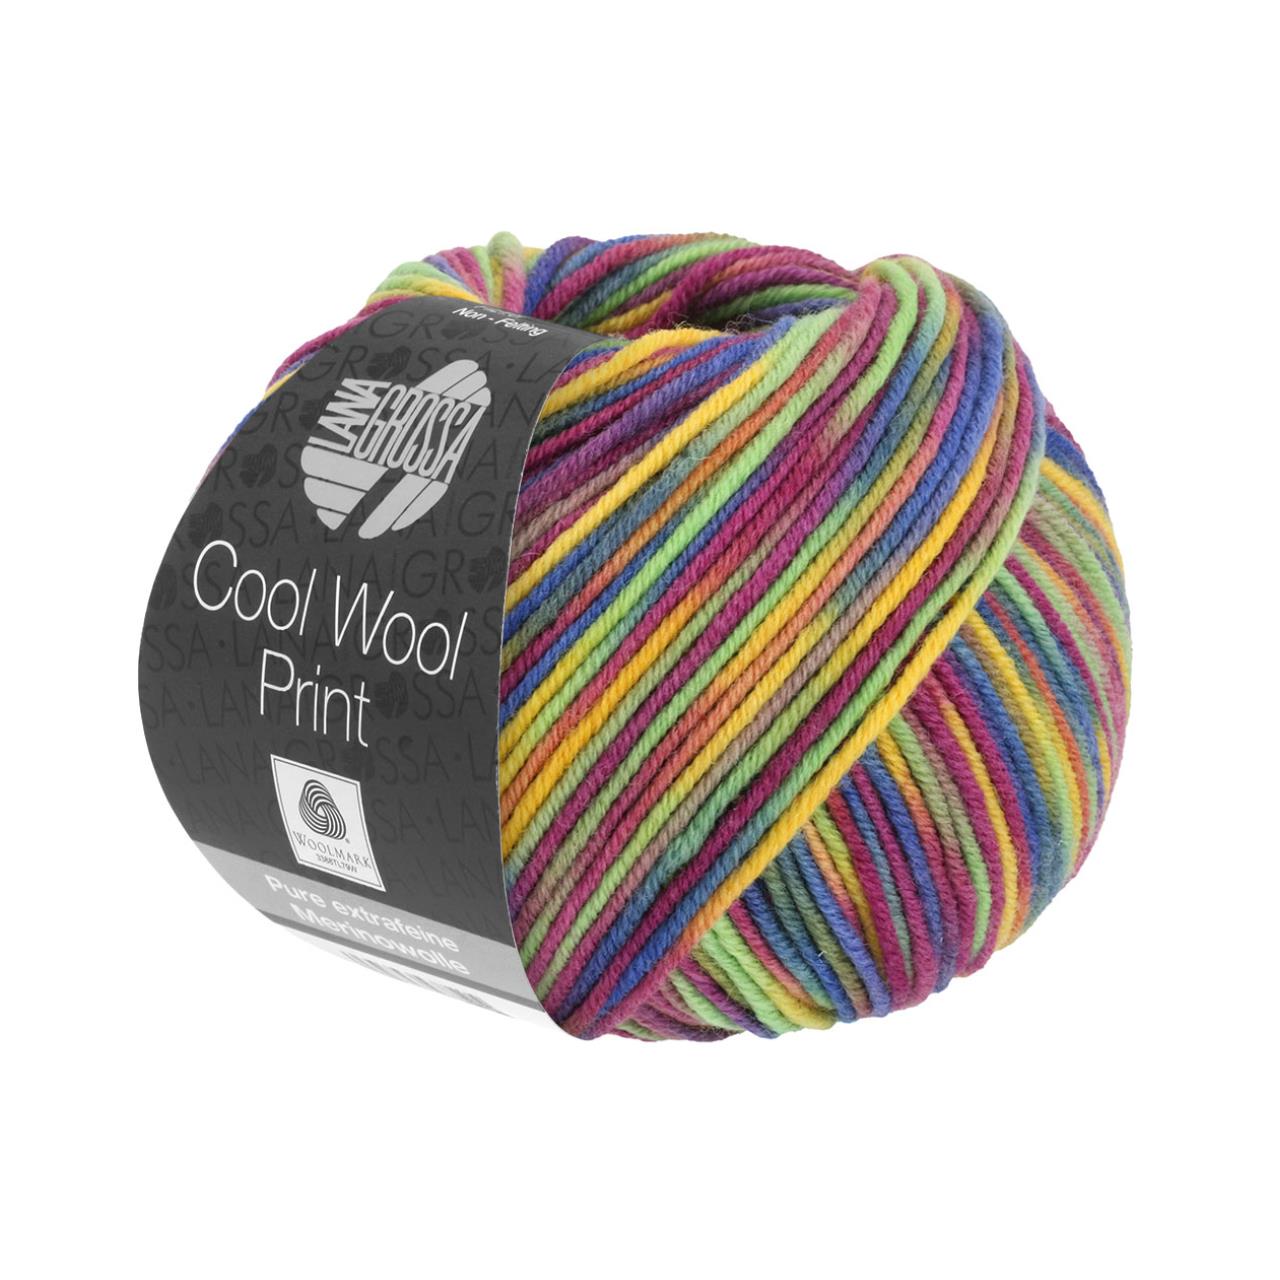 Cool Wool Print <br>826 Gelb/Resedagrün/Fuchsia/Taupe/Blau/Orange